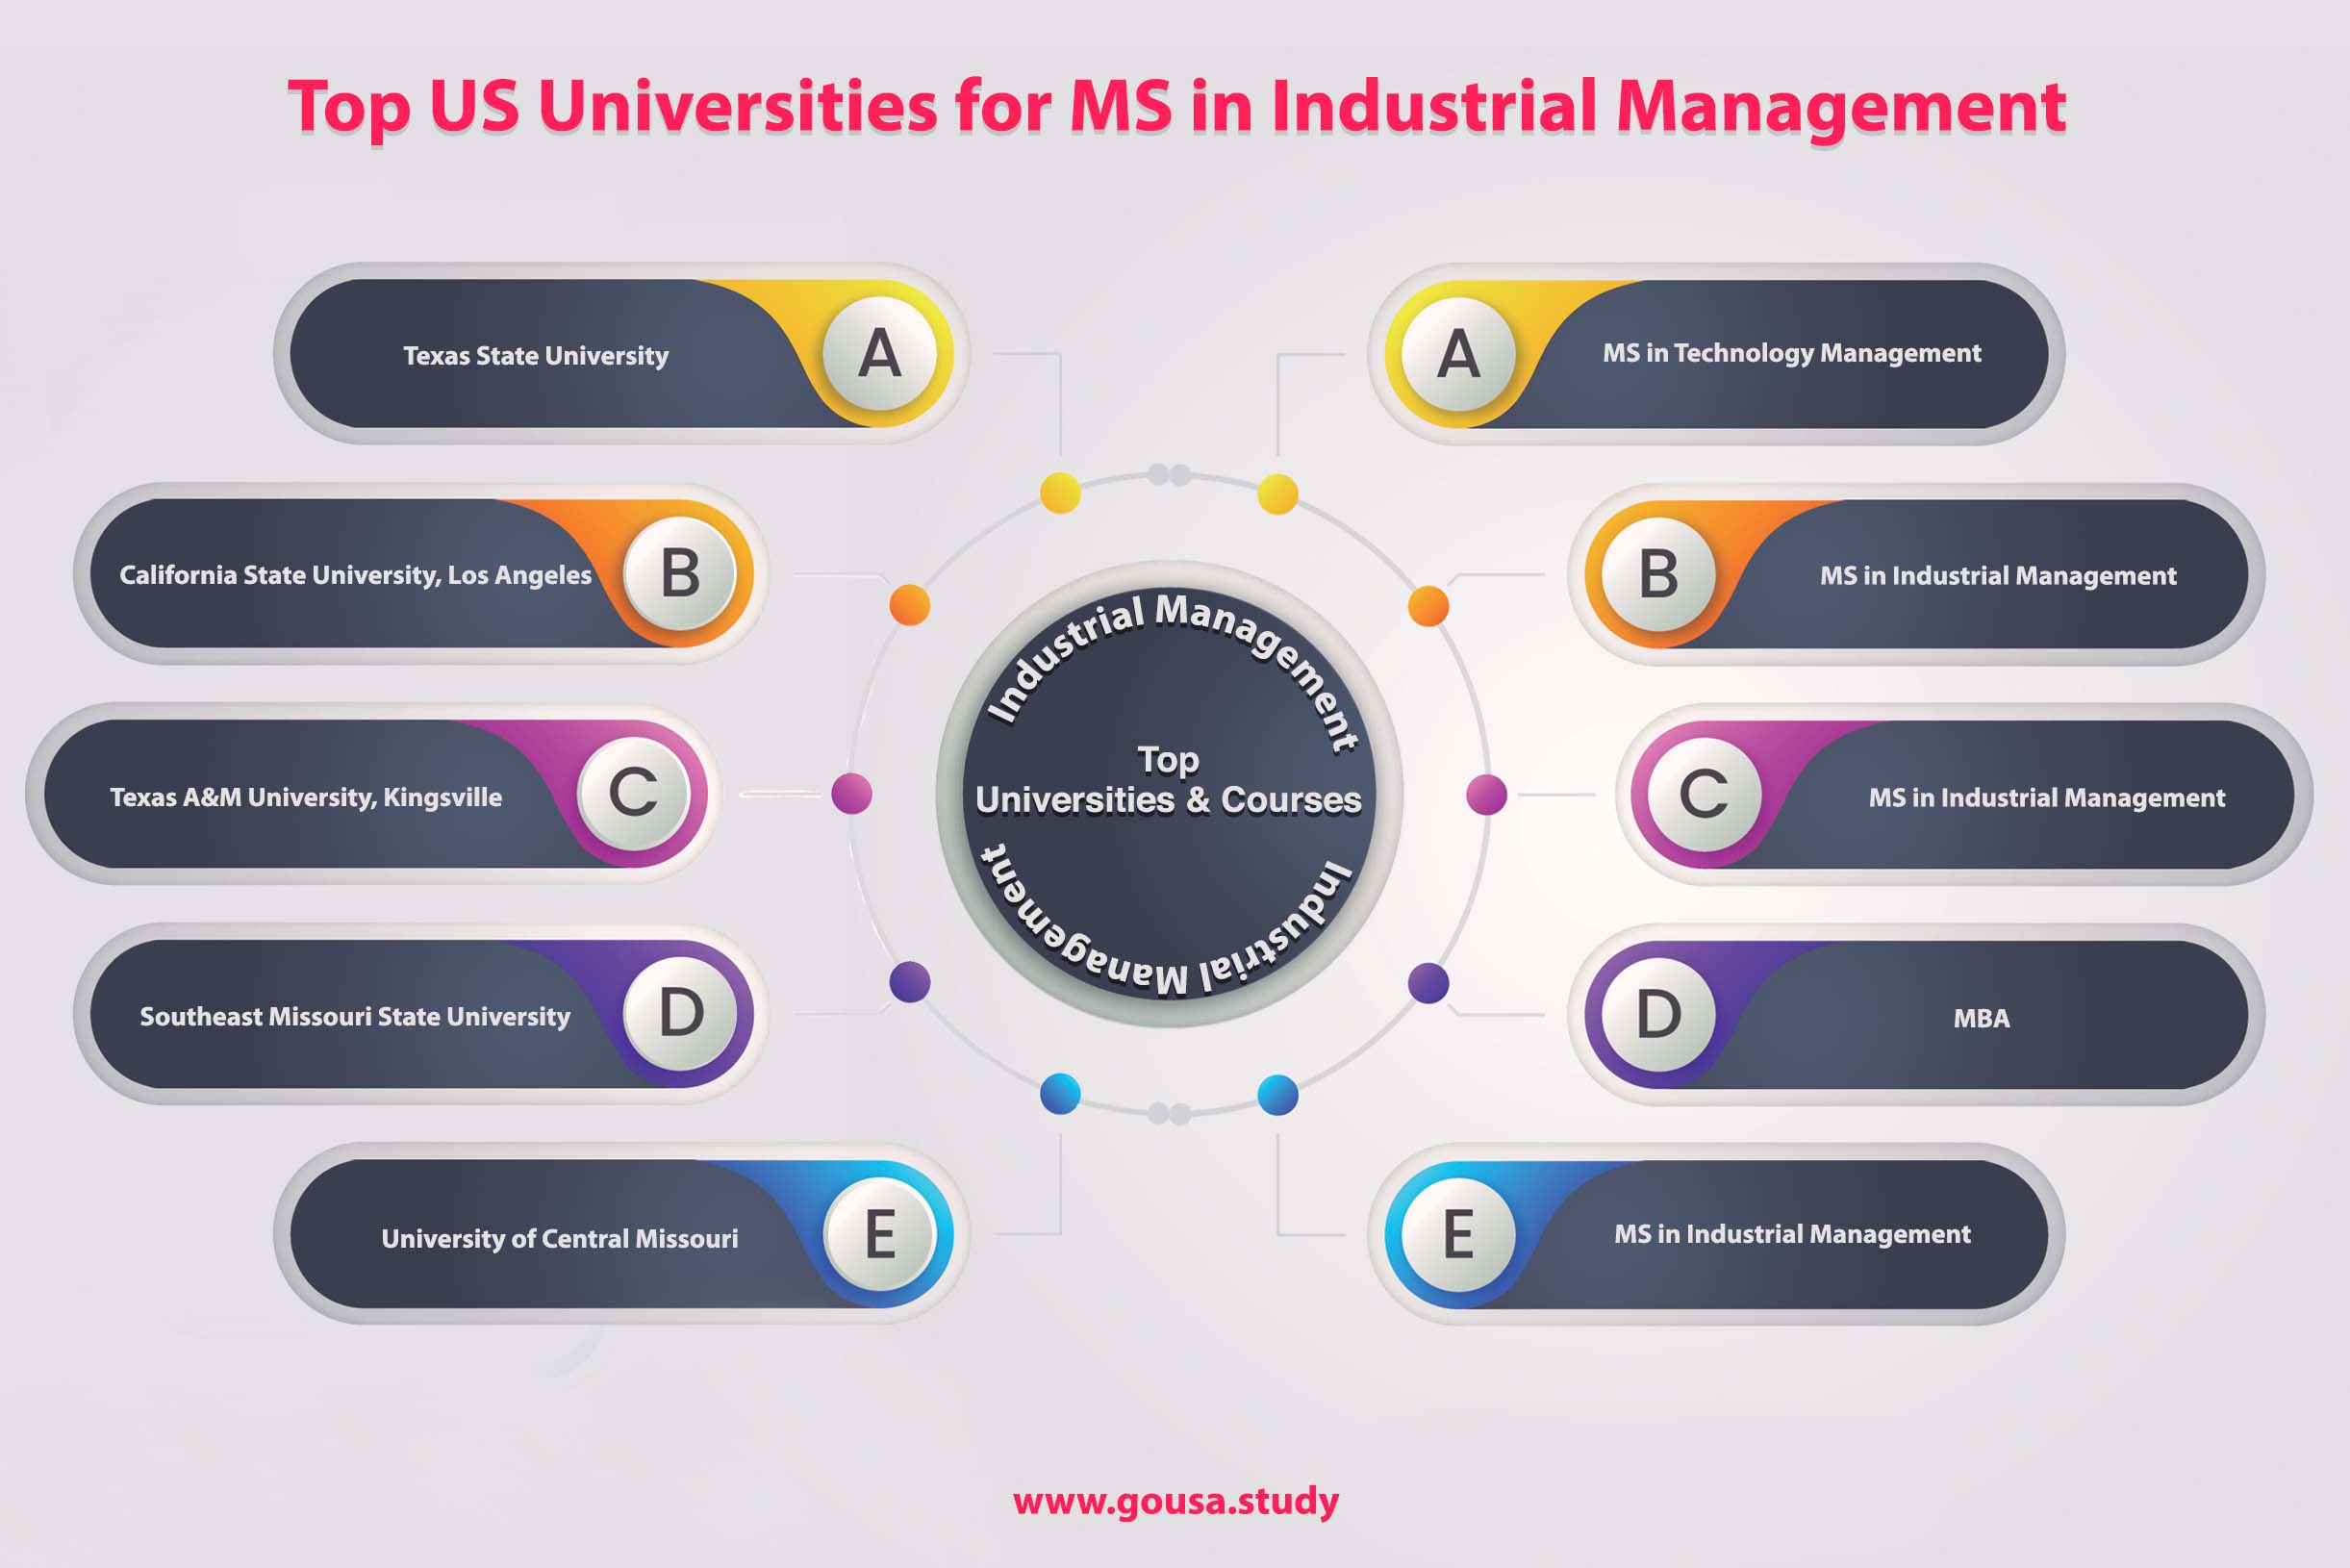 Top US Universities for MS in Industrial Management